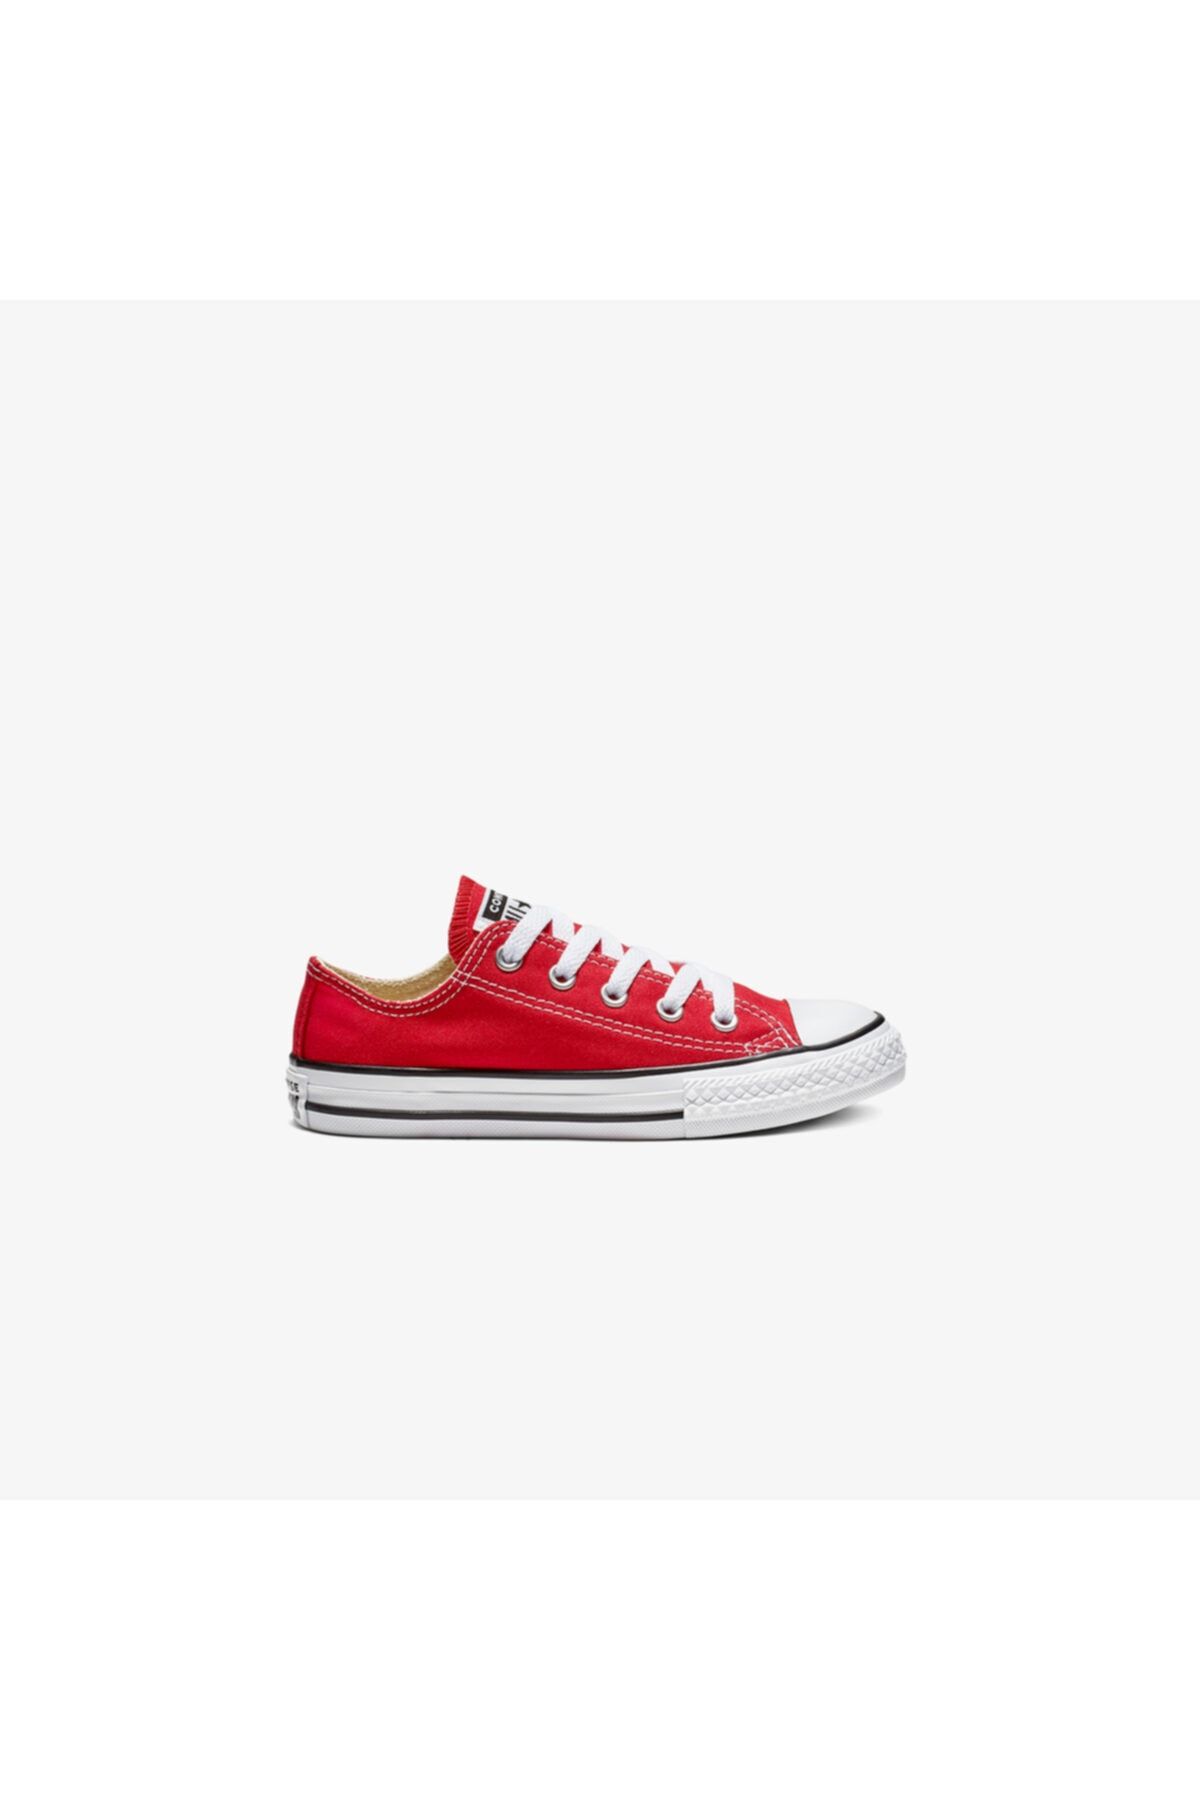 Converse Unisex Çocuk Chuck Taylor All Star Kırmızı Sneaker 3J236C-S